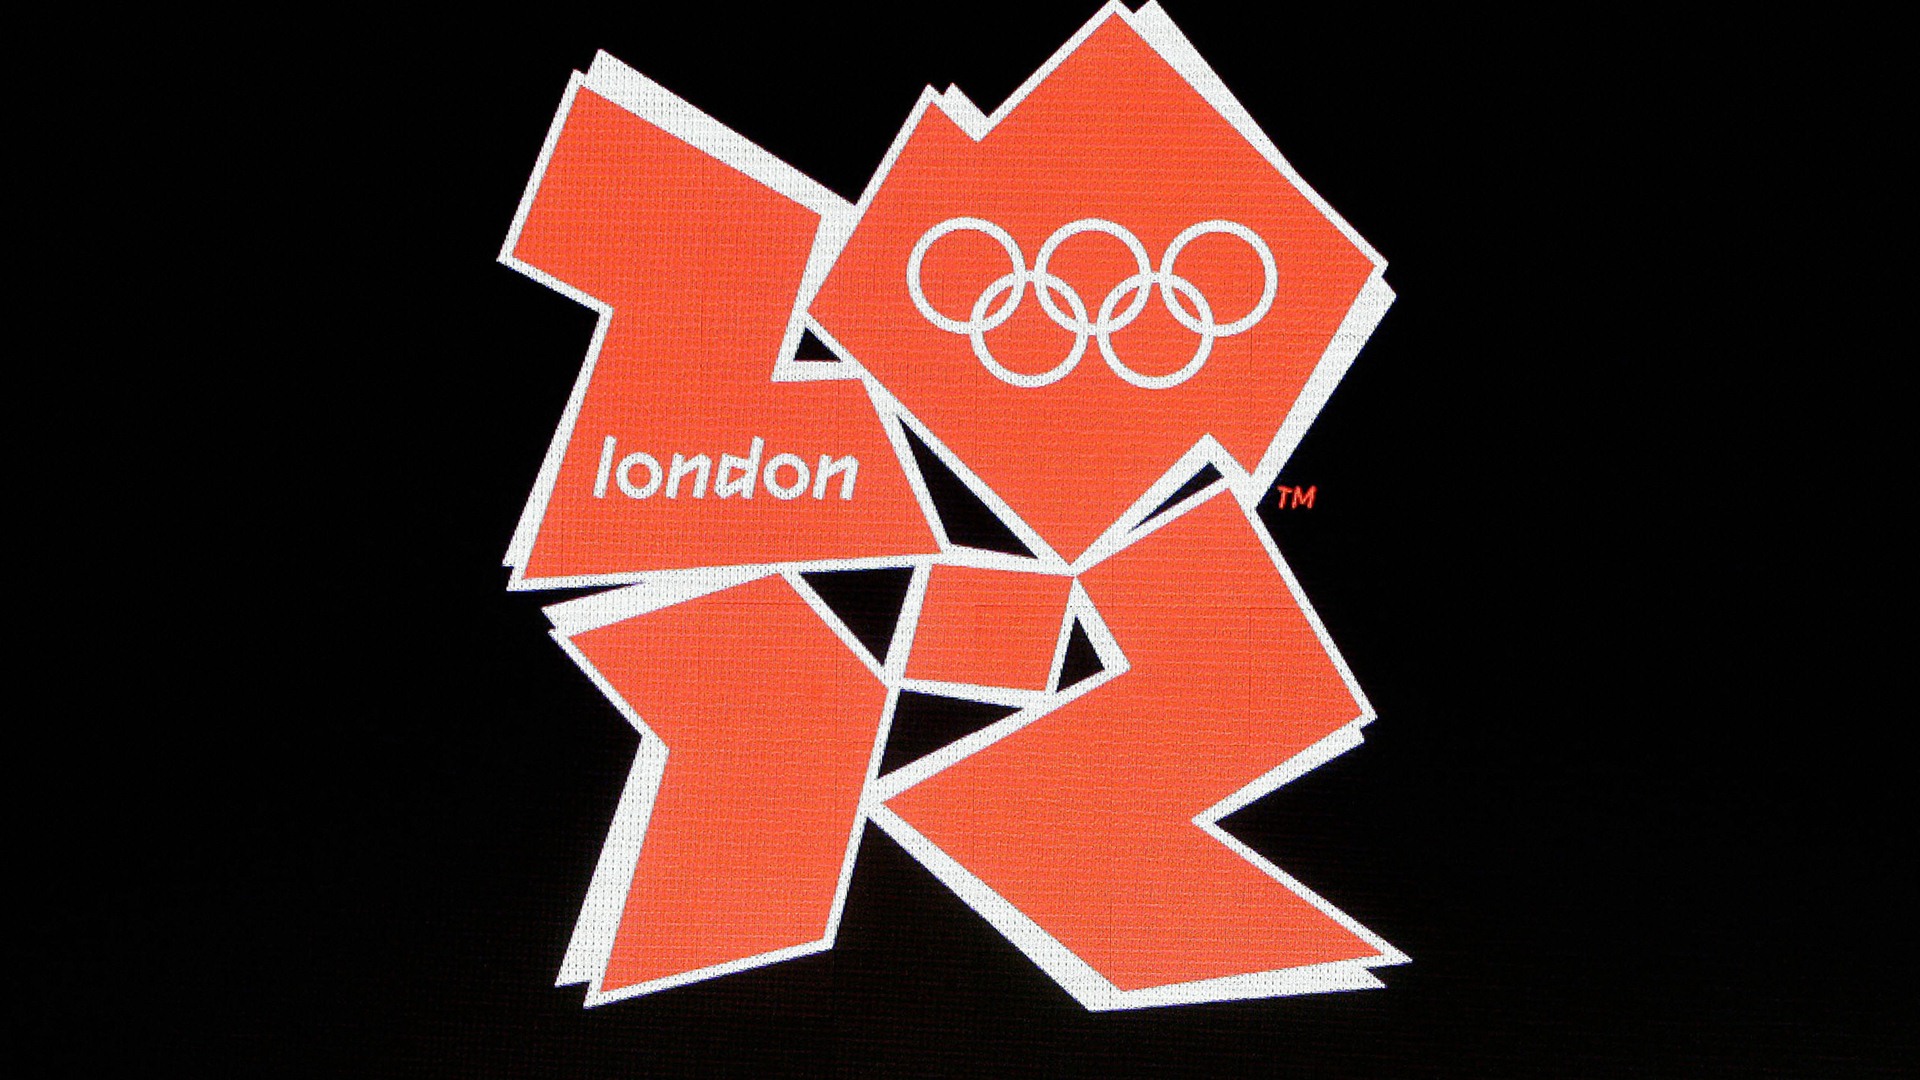 London 2012 Olympics theme wallpapers (2) #30 - 1920x1080